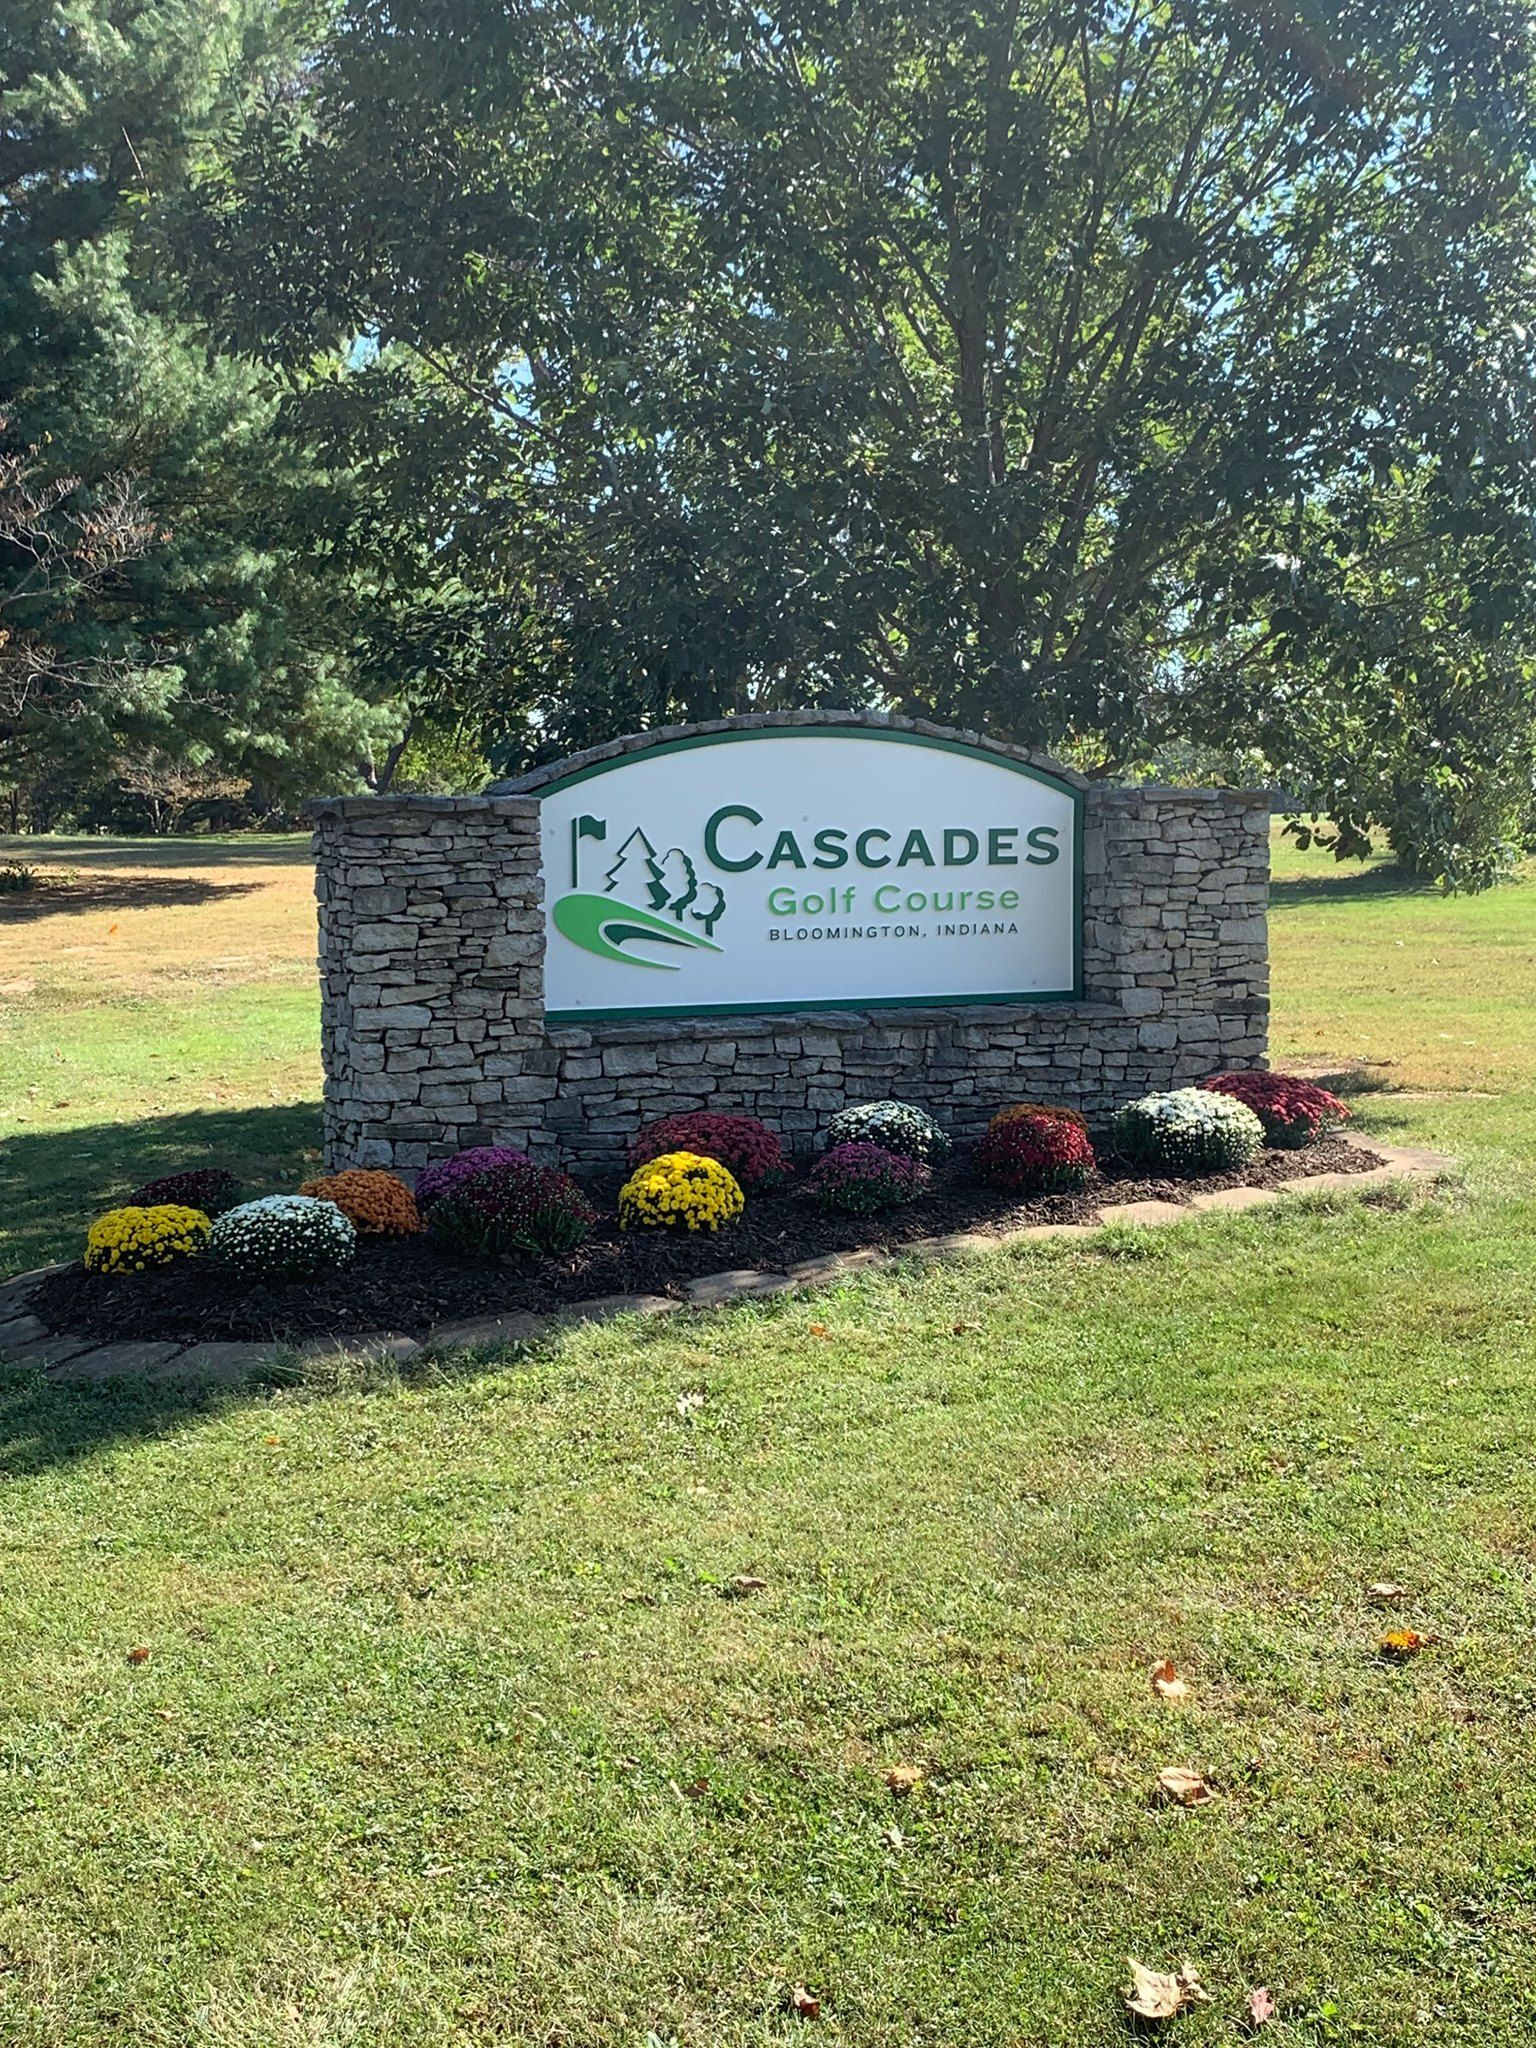 Cascades Golf Course in Bloomington, Indiana.